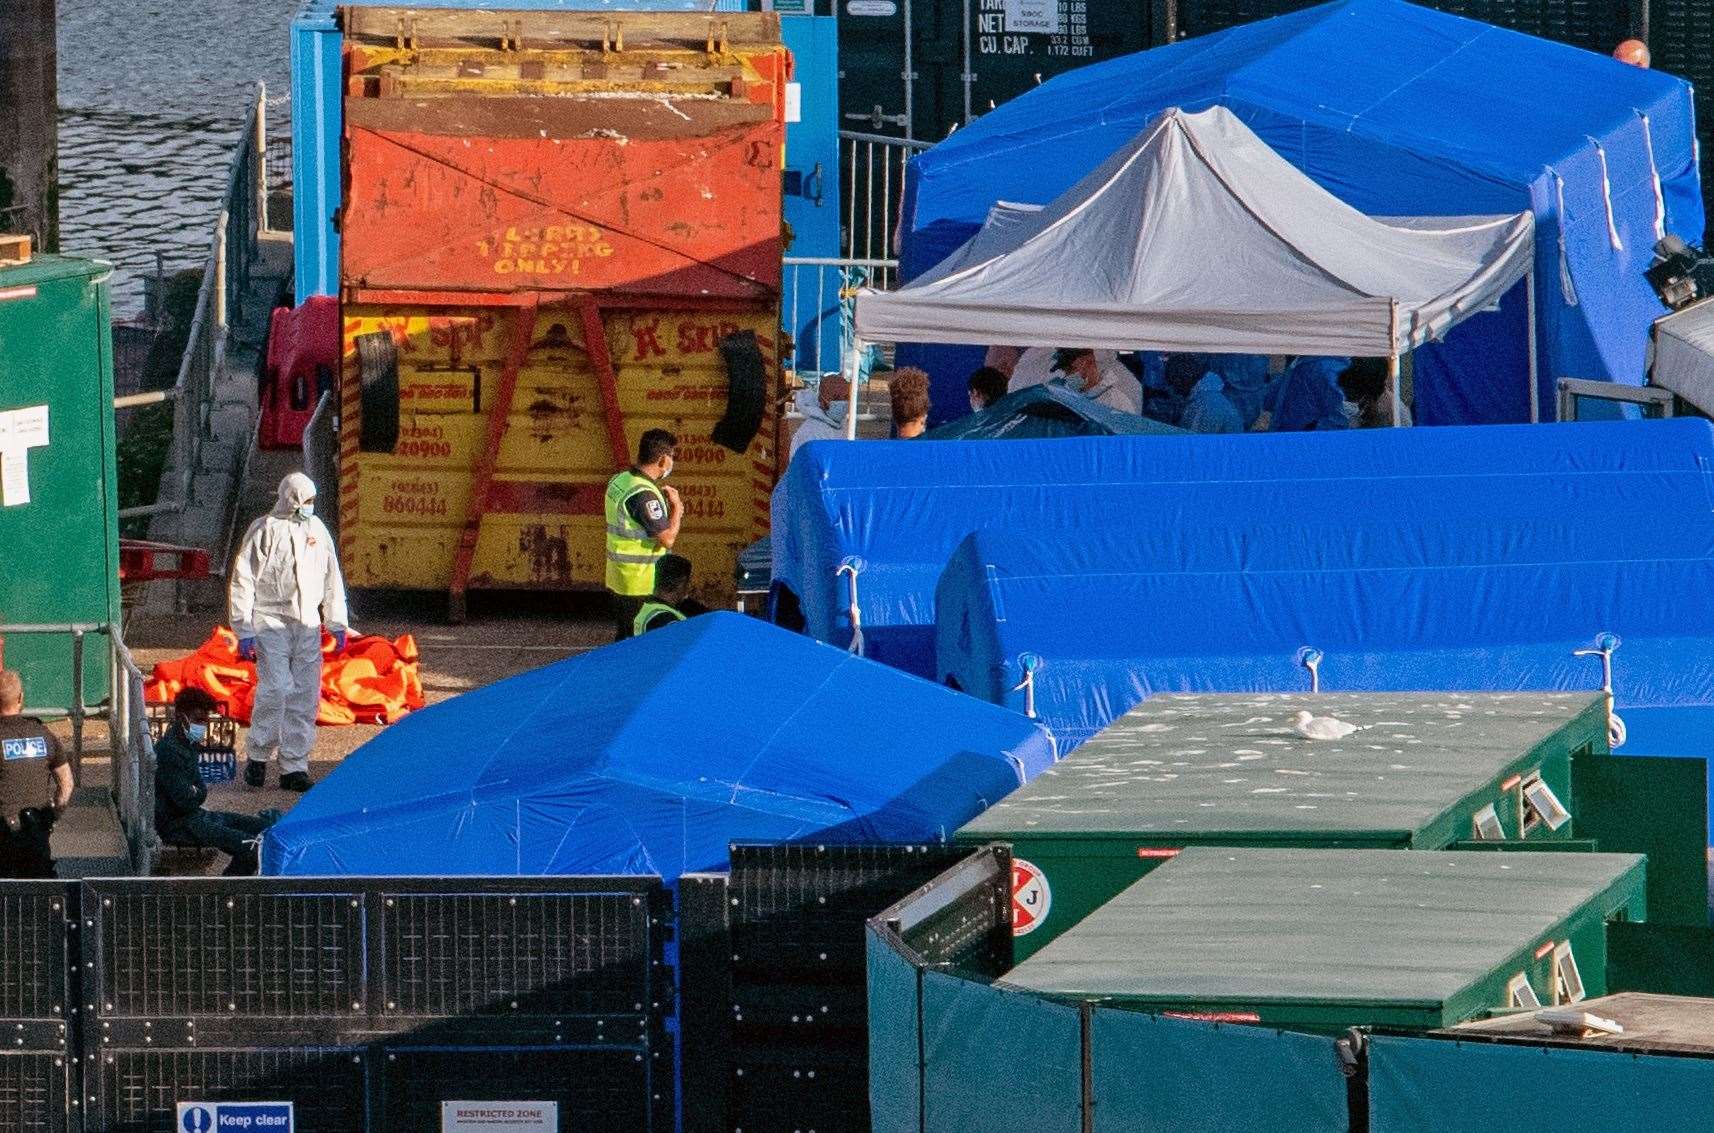 Blue control tents were set up as part of the biohazard response. Credit: Stuart Brock